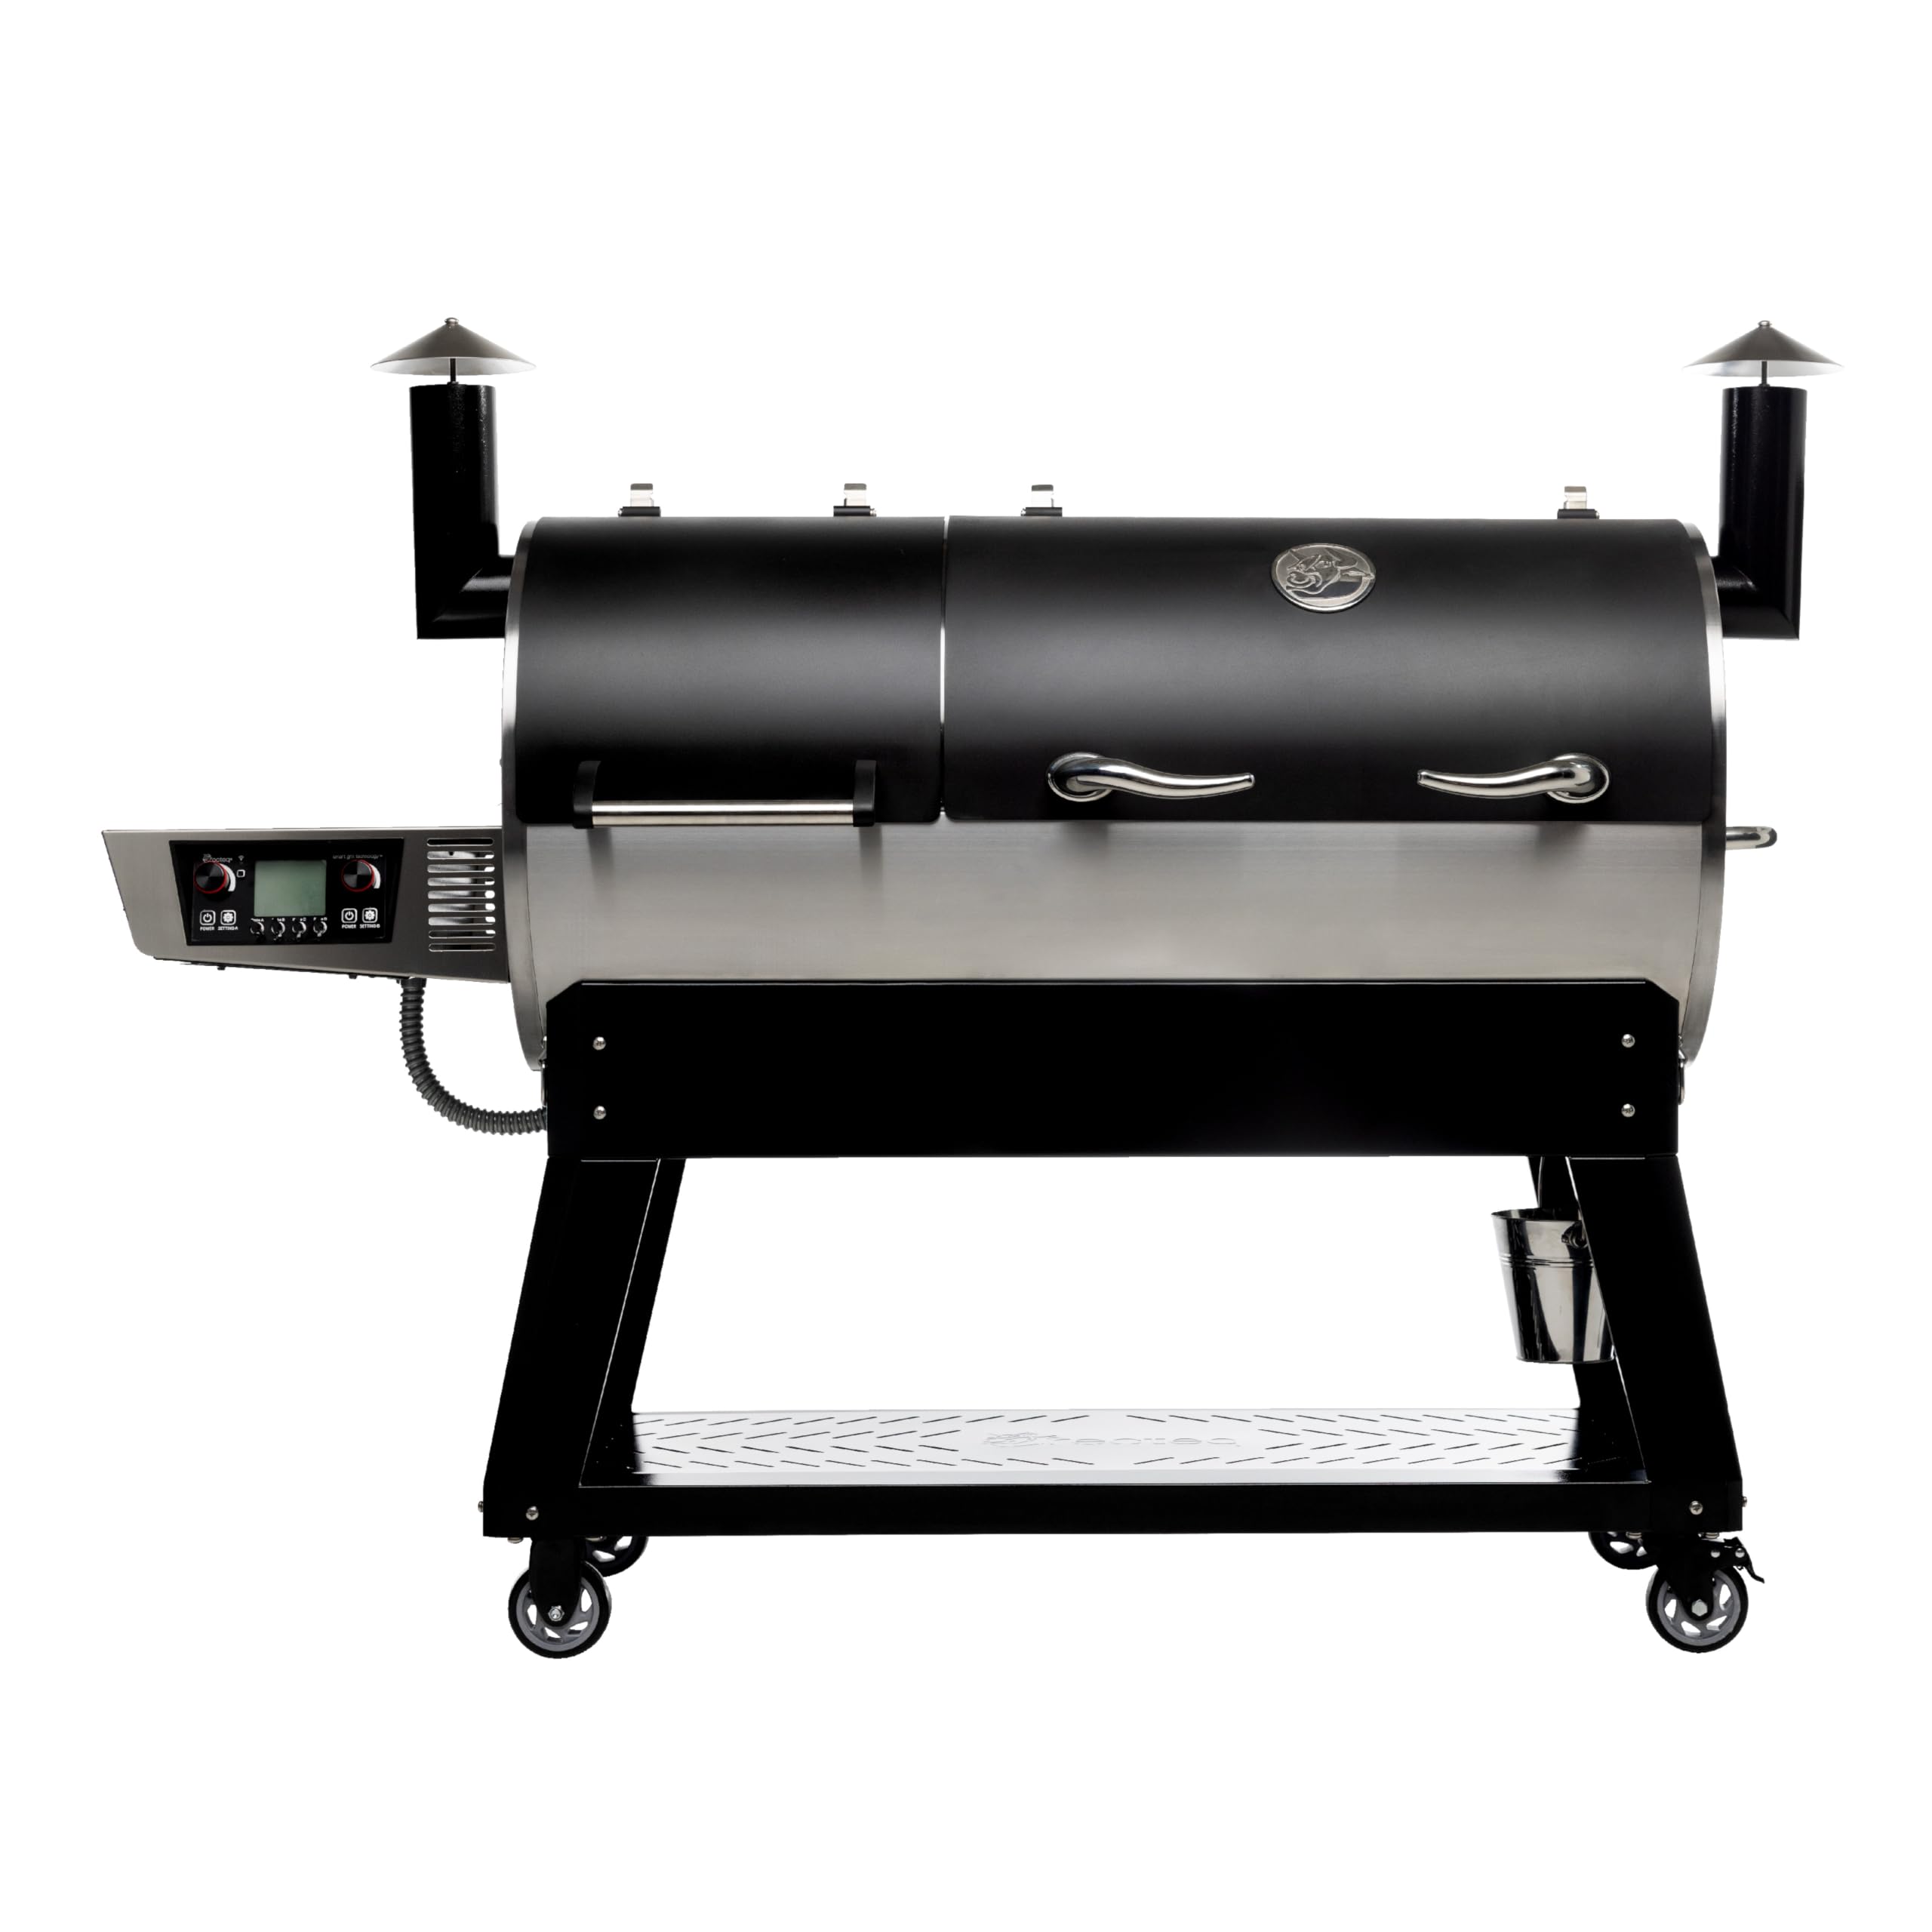 recteq DualFire RT-1200 Wood Pellet Smoker Grill